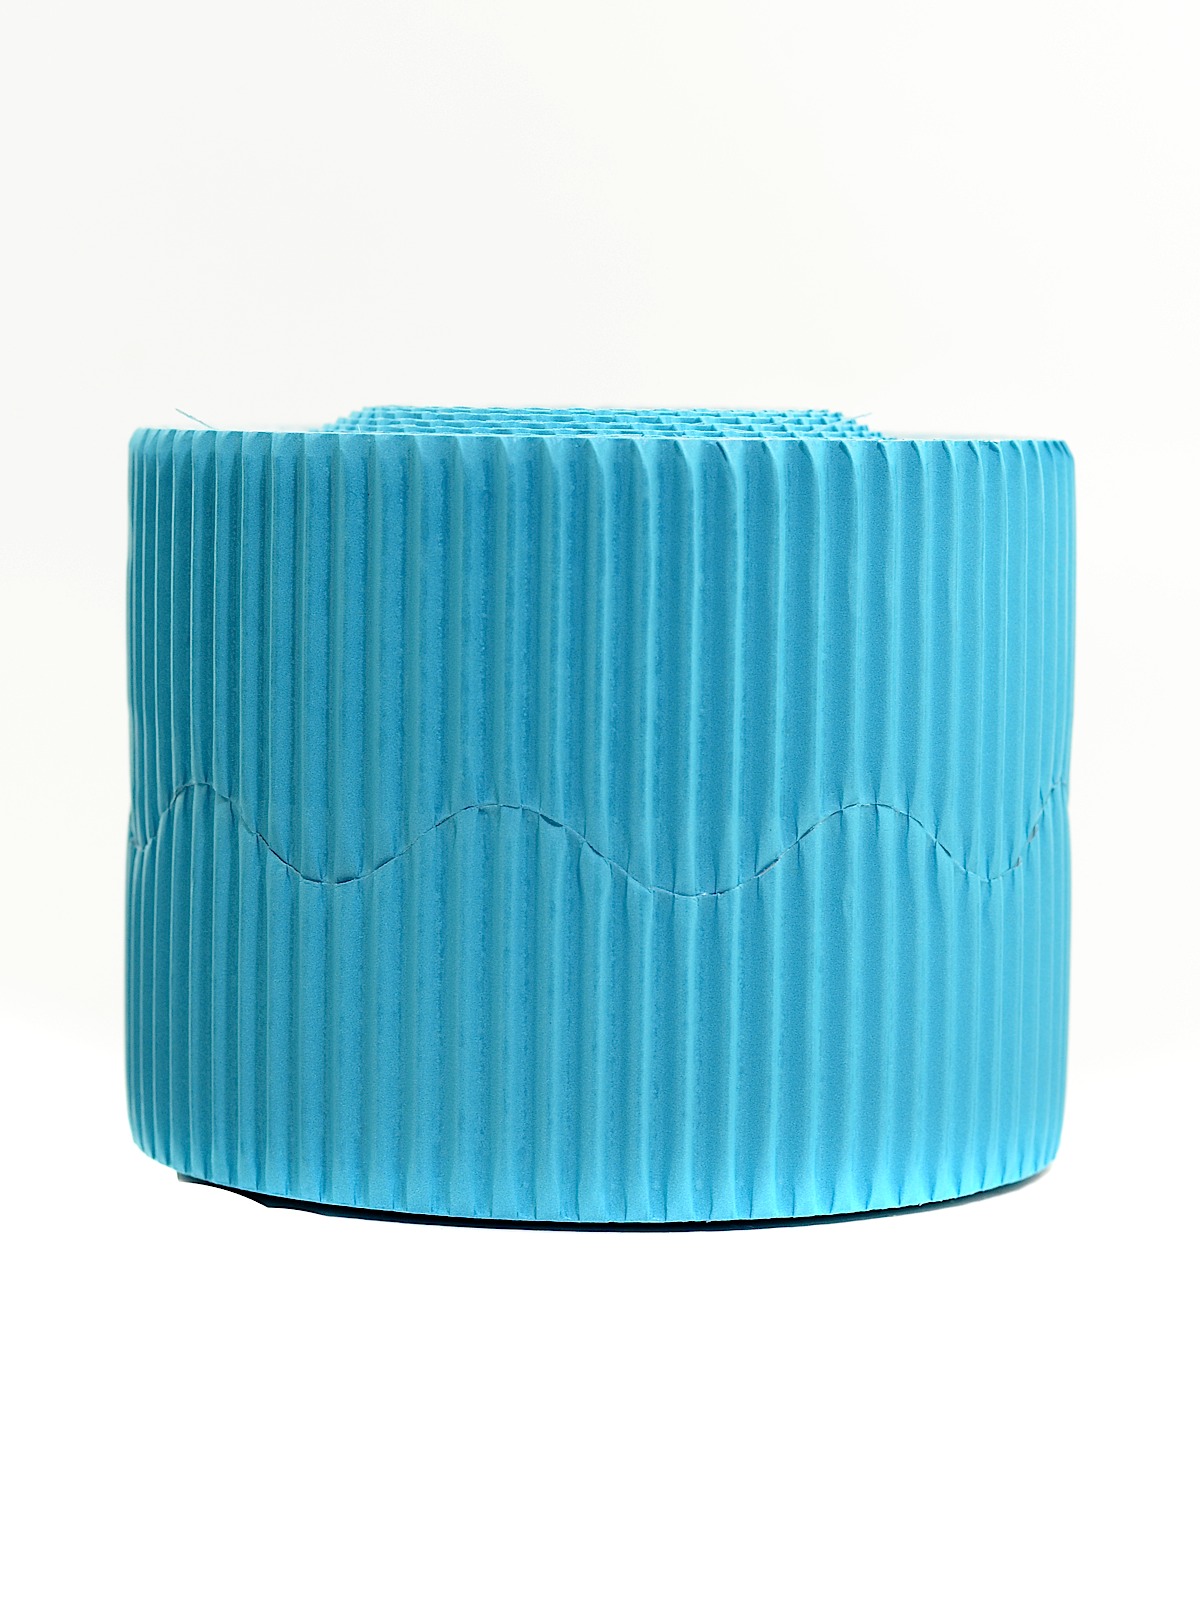 Bordette Corrugated Roll Azure Blue